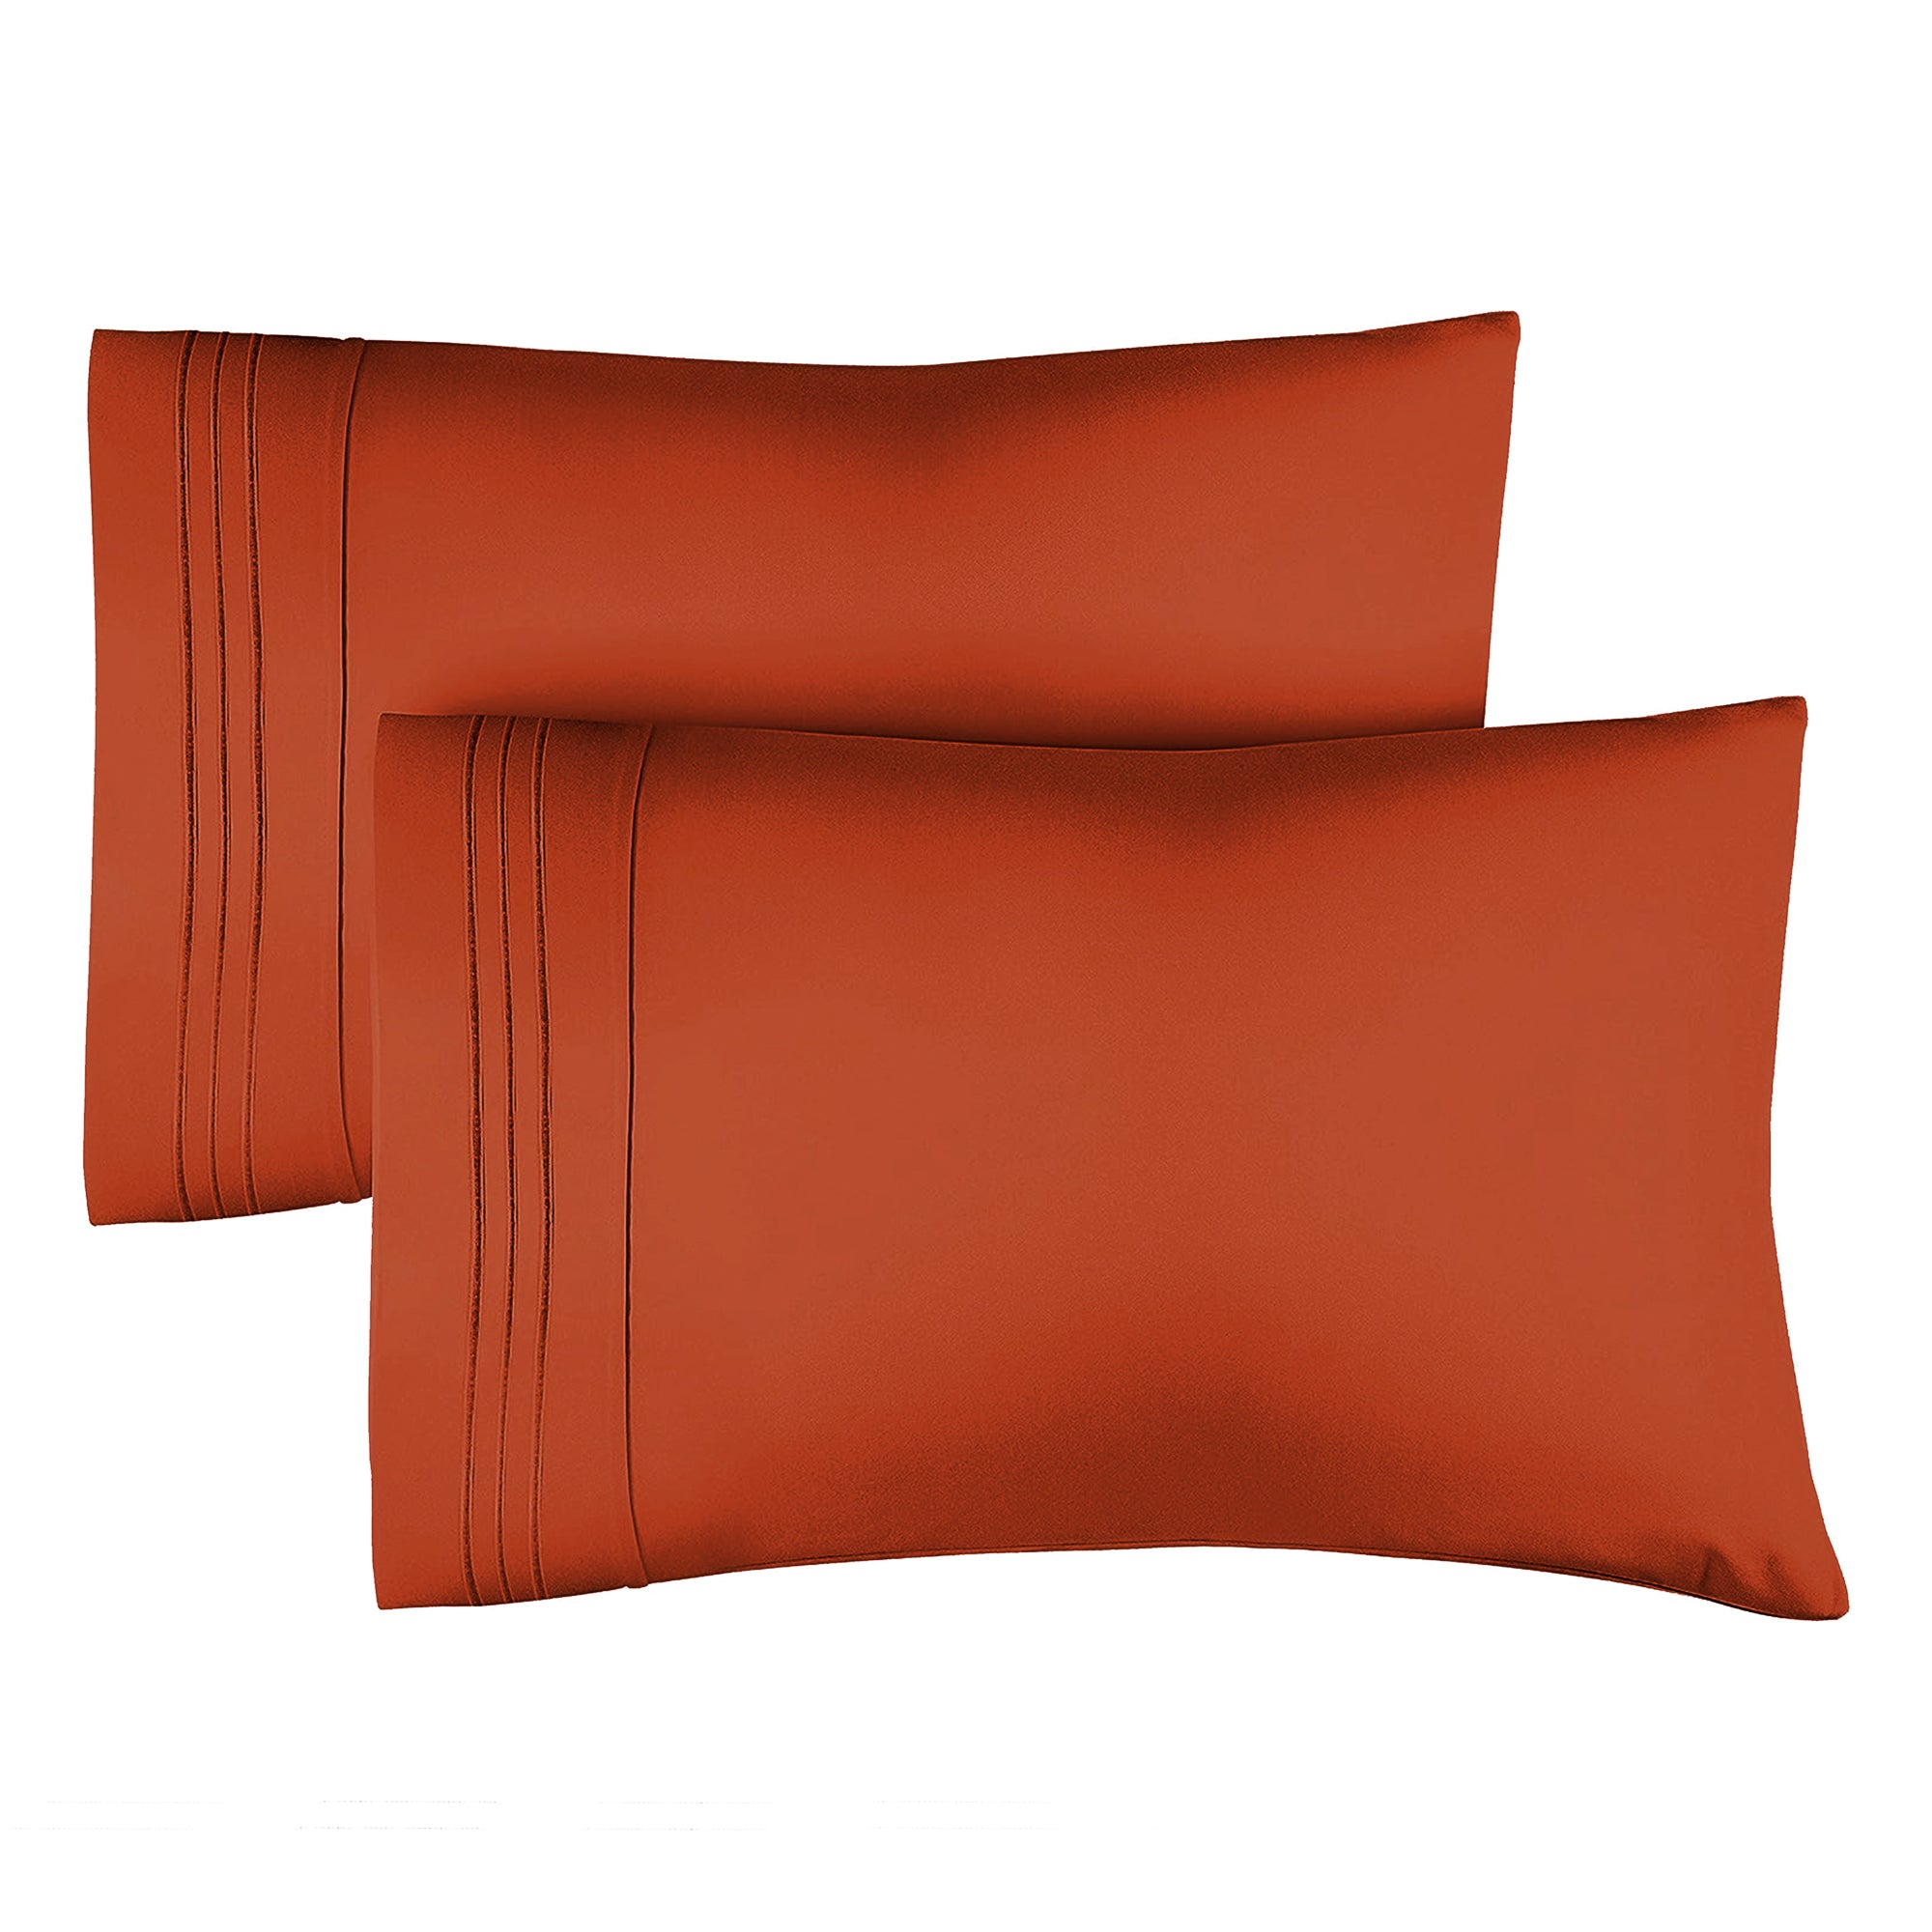 2 Pillowcase Set - Terra Cotta